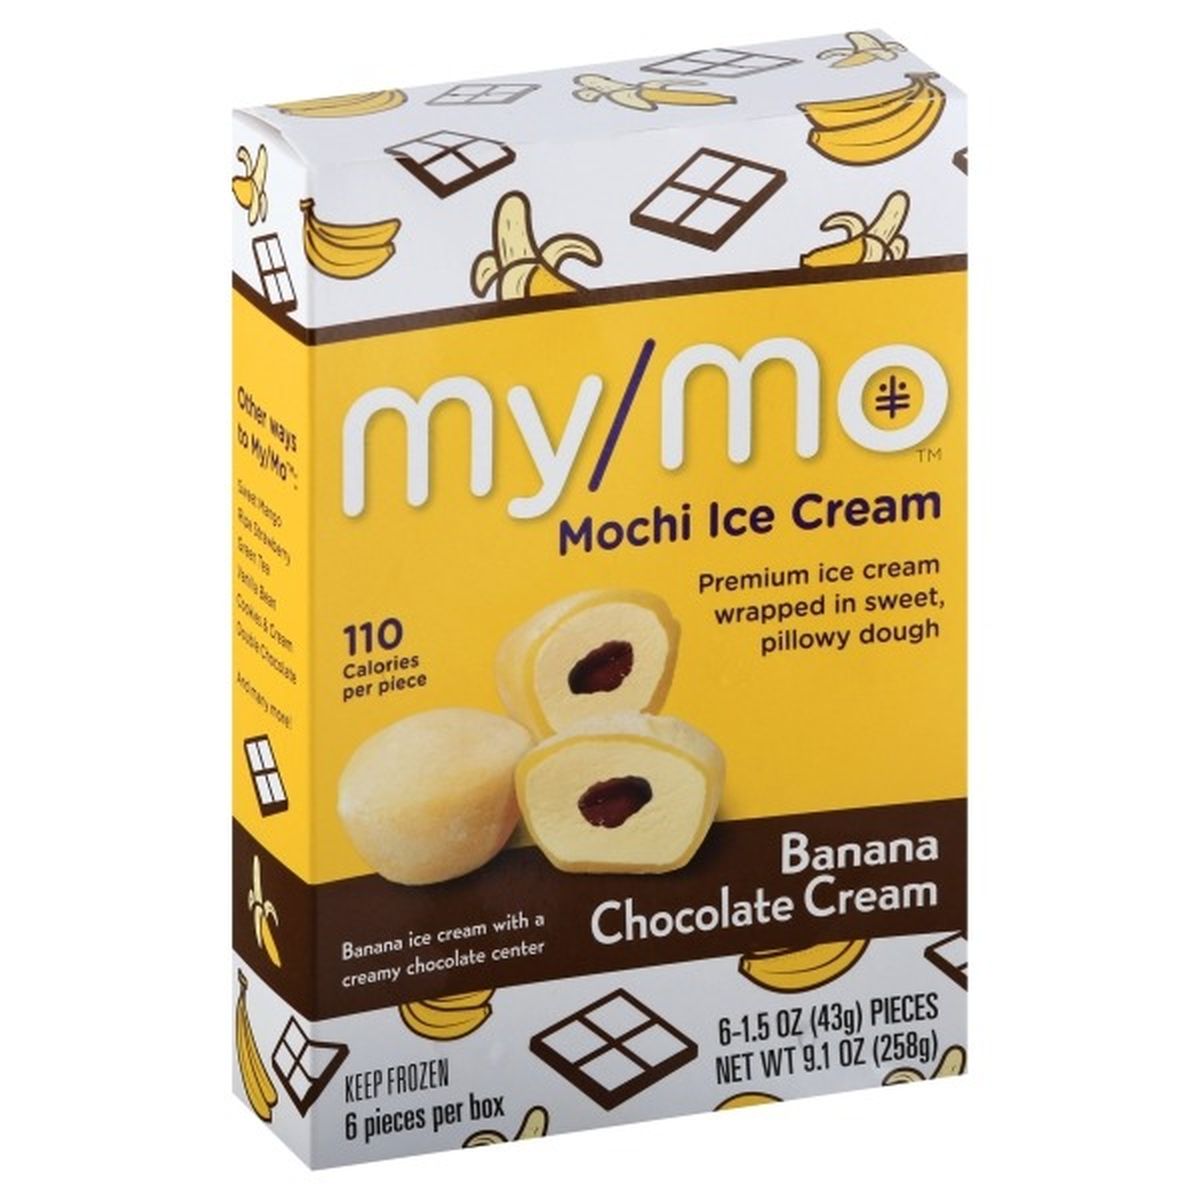 Calories in My/Mo Mochi Ice Cream, Banana Chocolate Cream